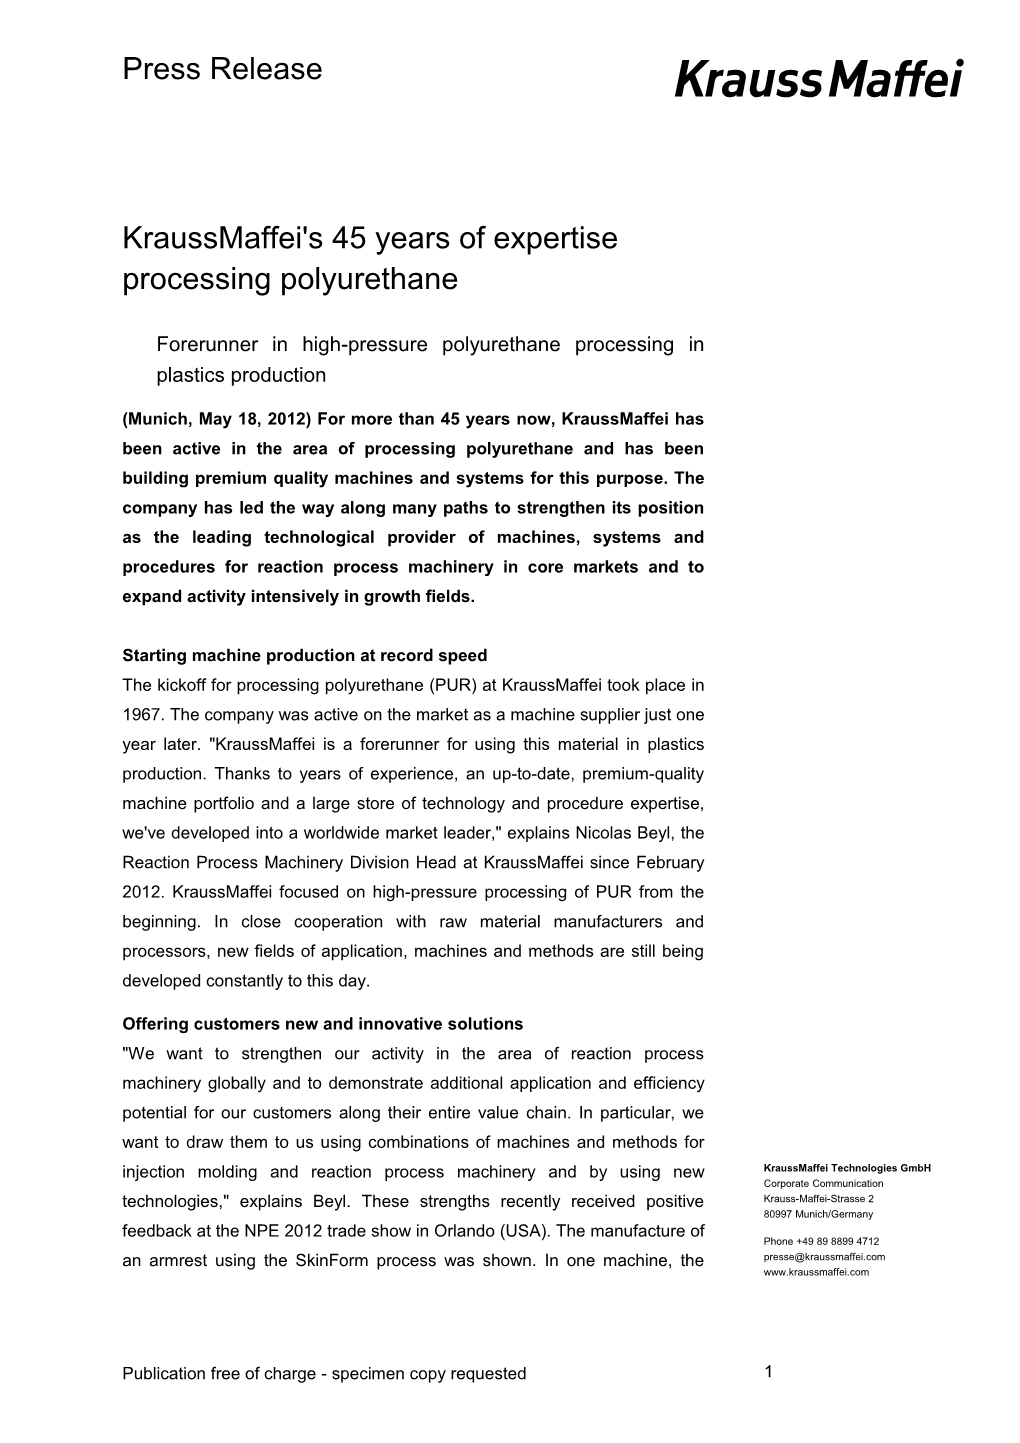 Kraussmaffei's 45 Years of Expertise Processing Polyurethane